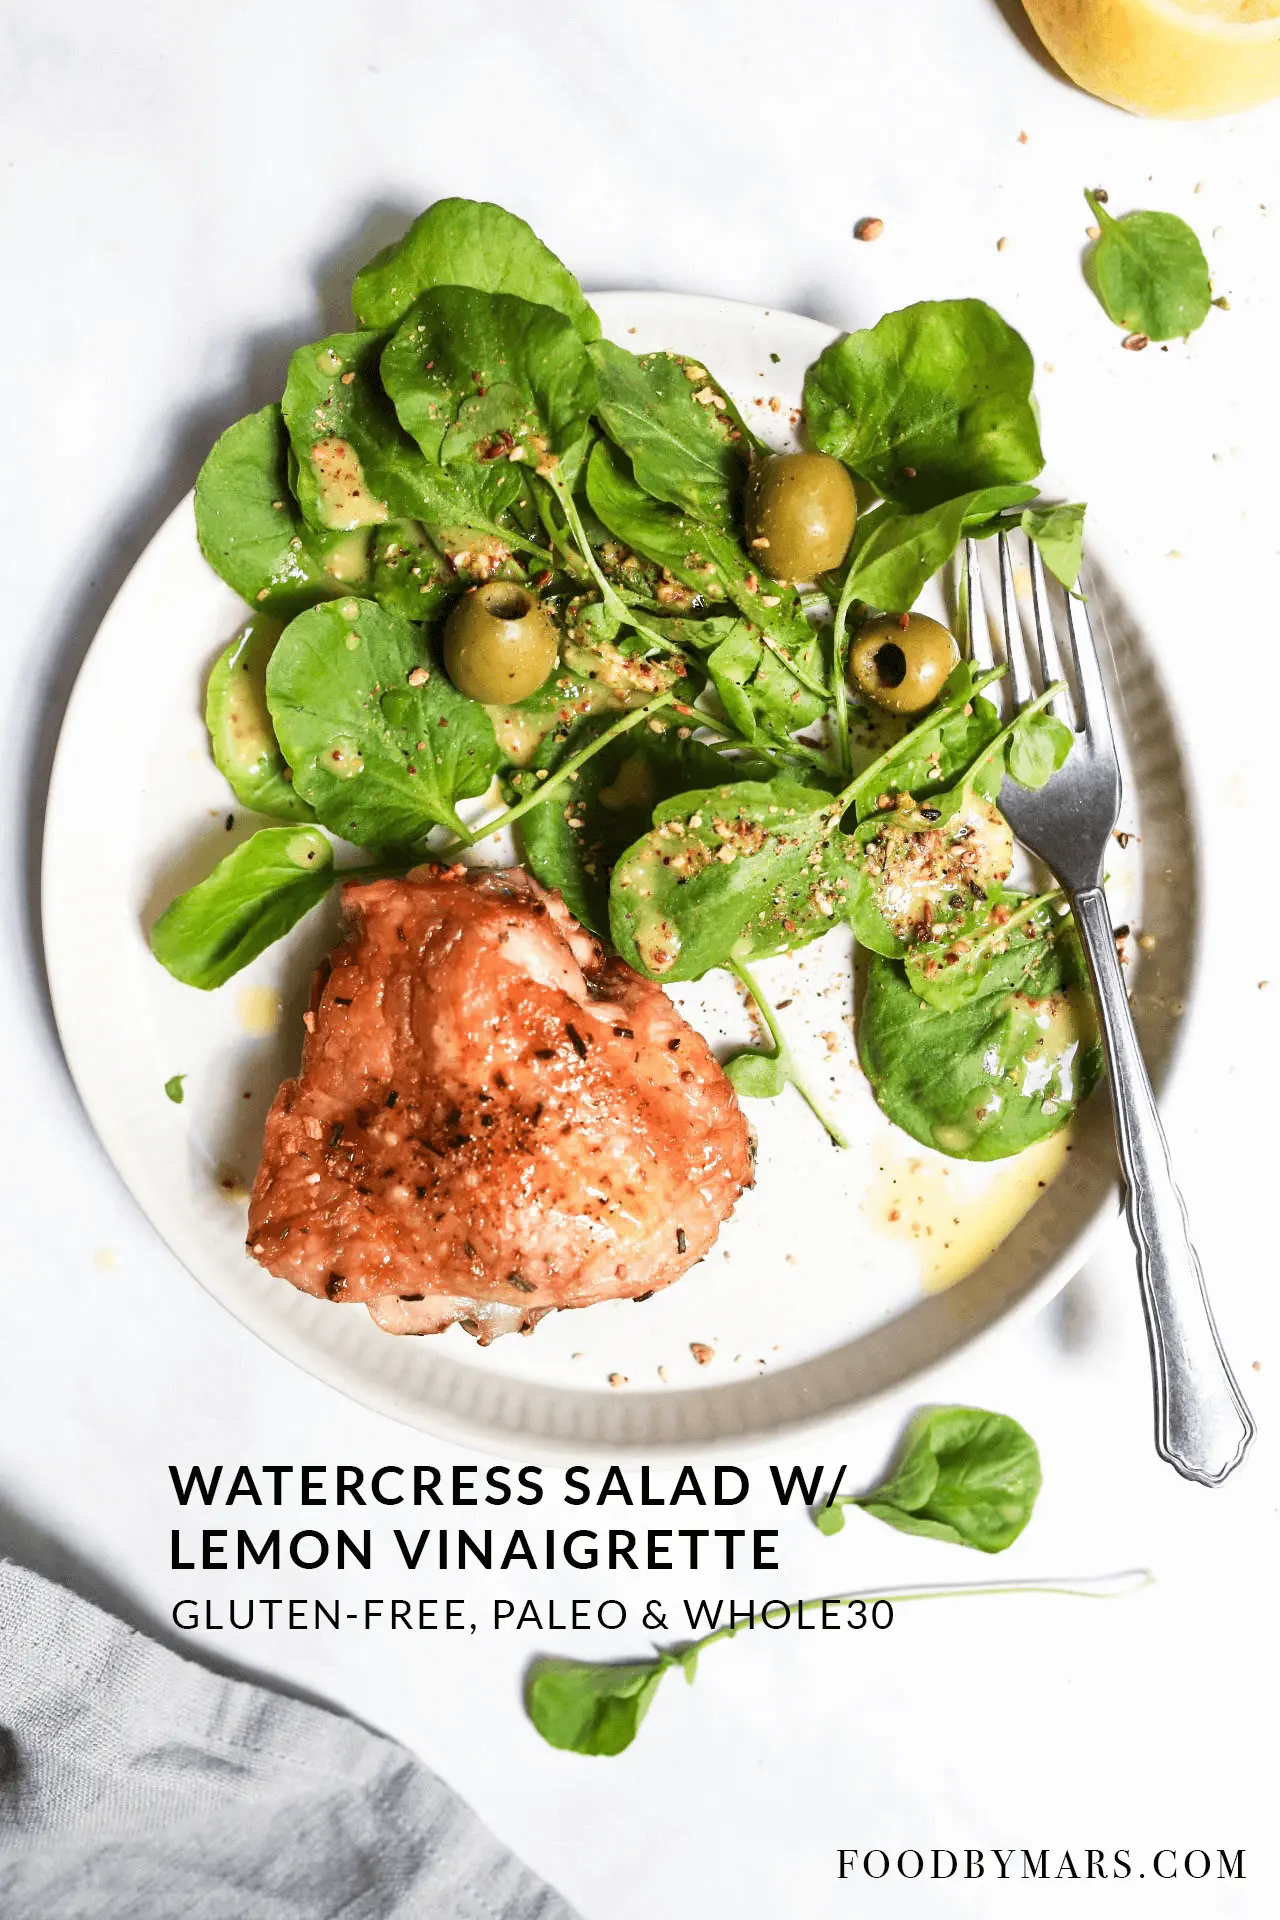 How To Make Watercress Salad with Lemon Vinaigrette recipe